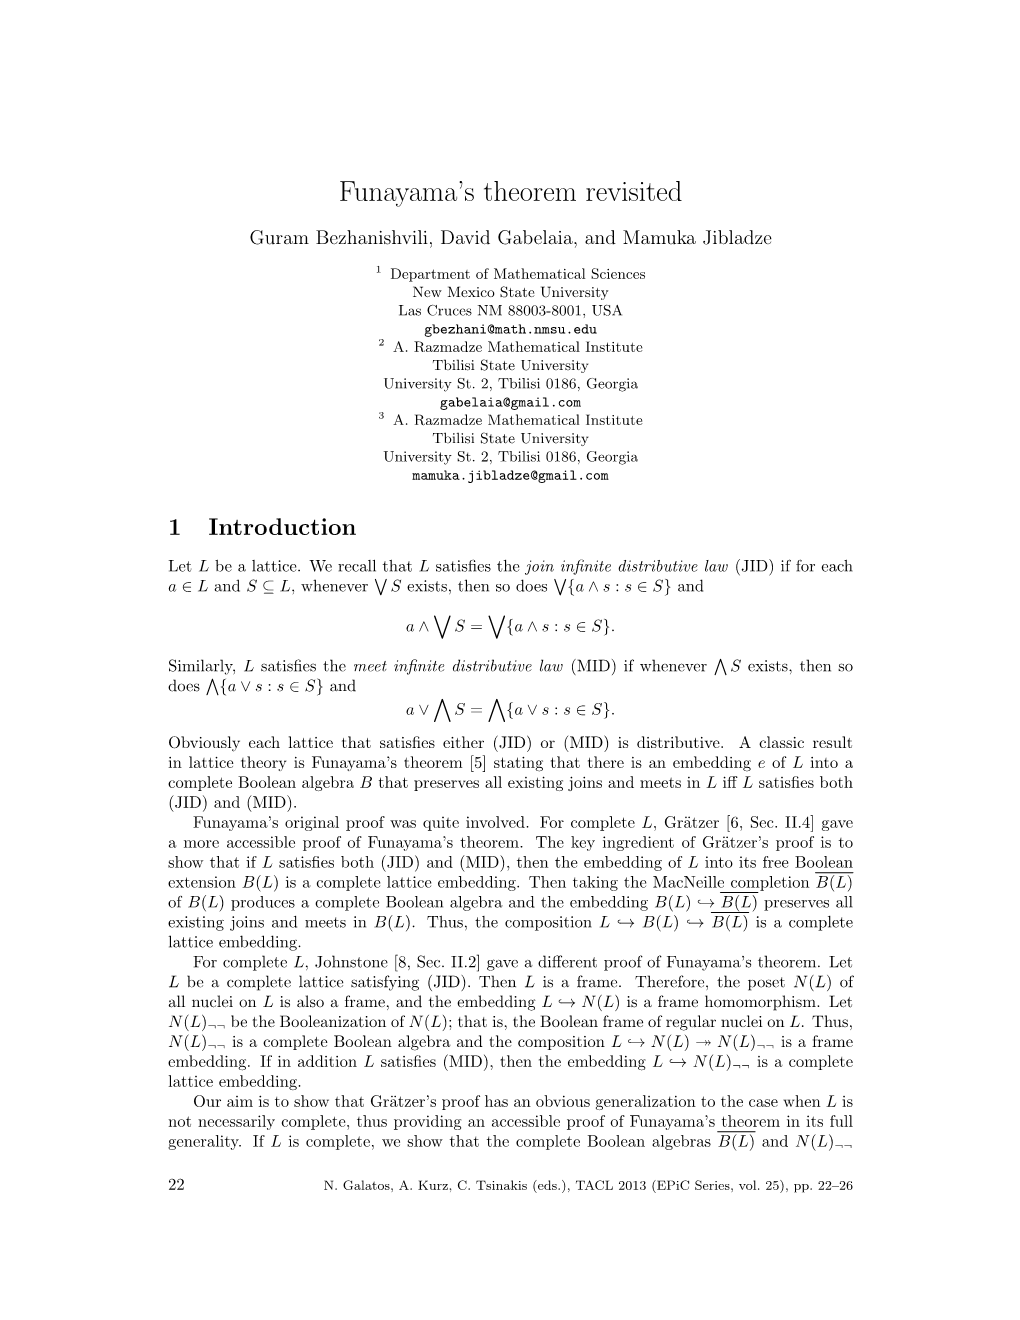 Funayama's Theorem Revisited